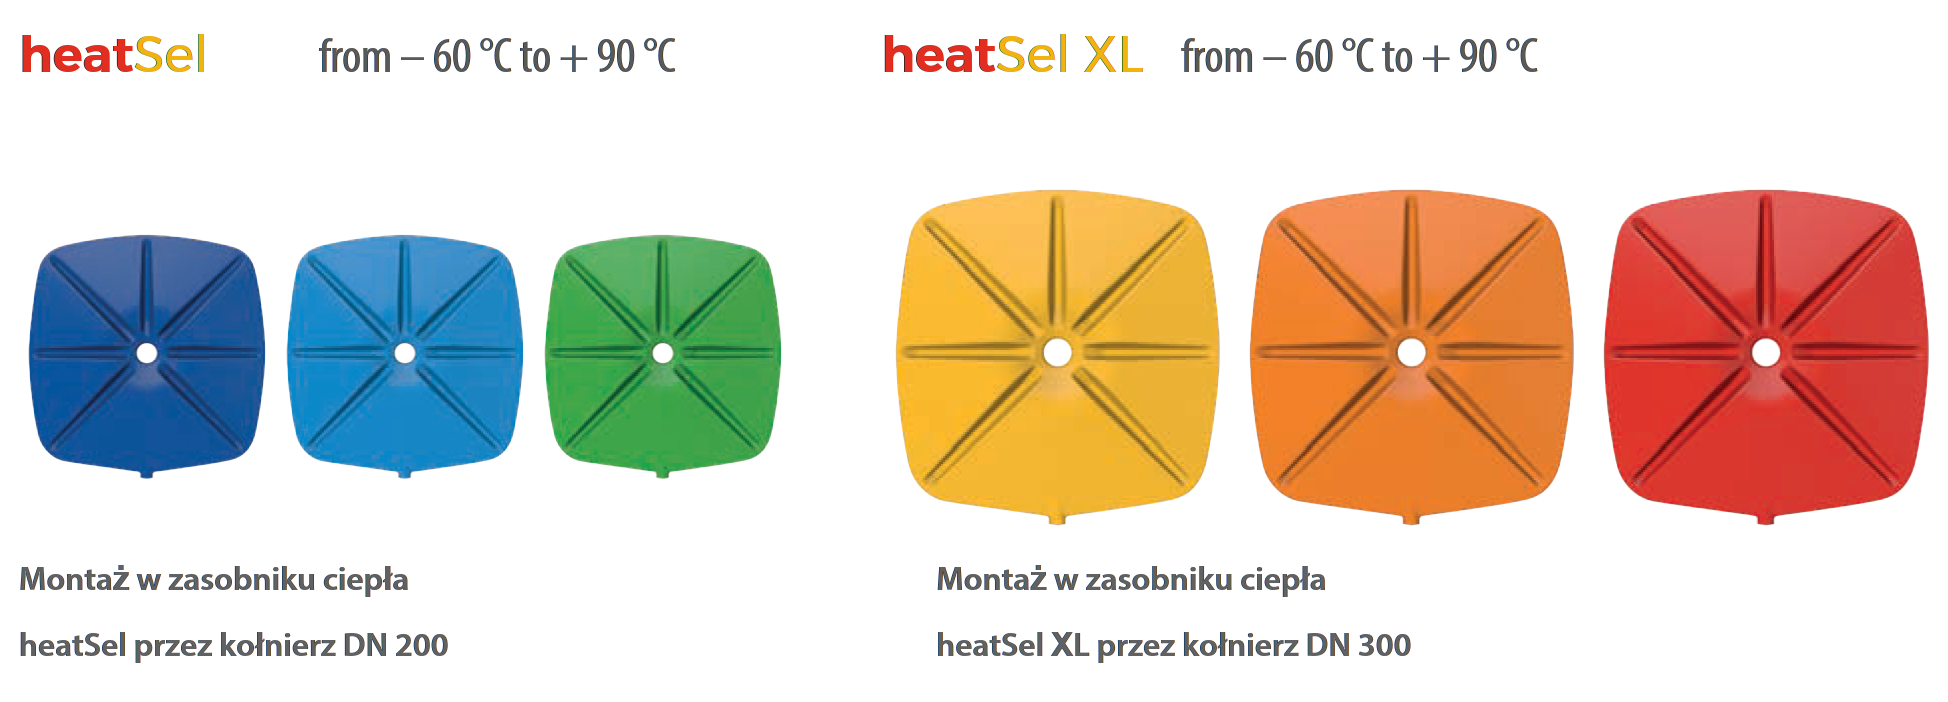 HeatSeal温度範囲の適用